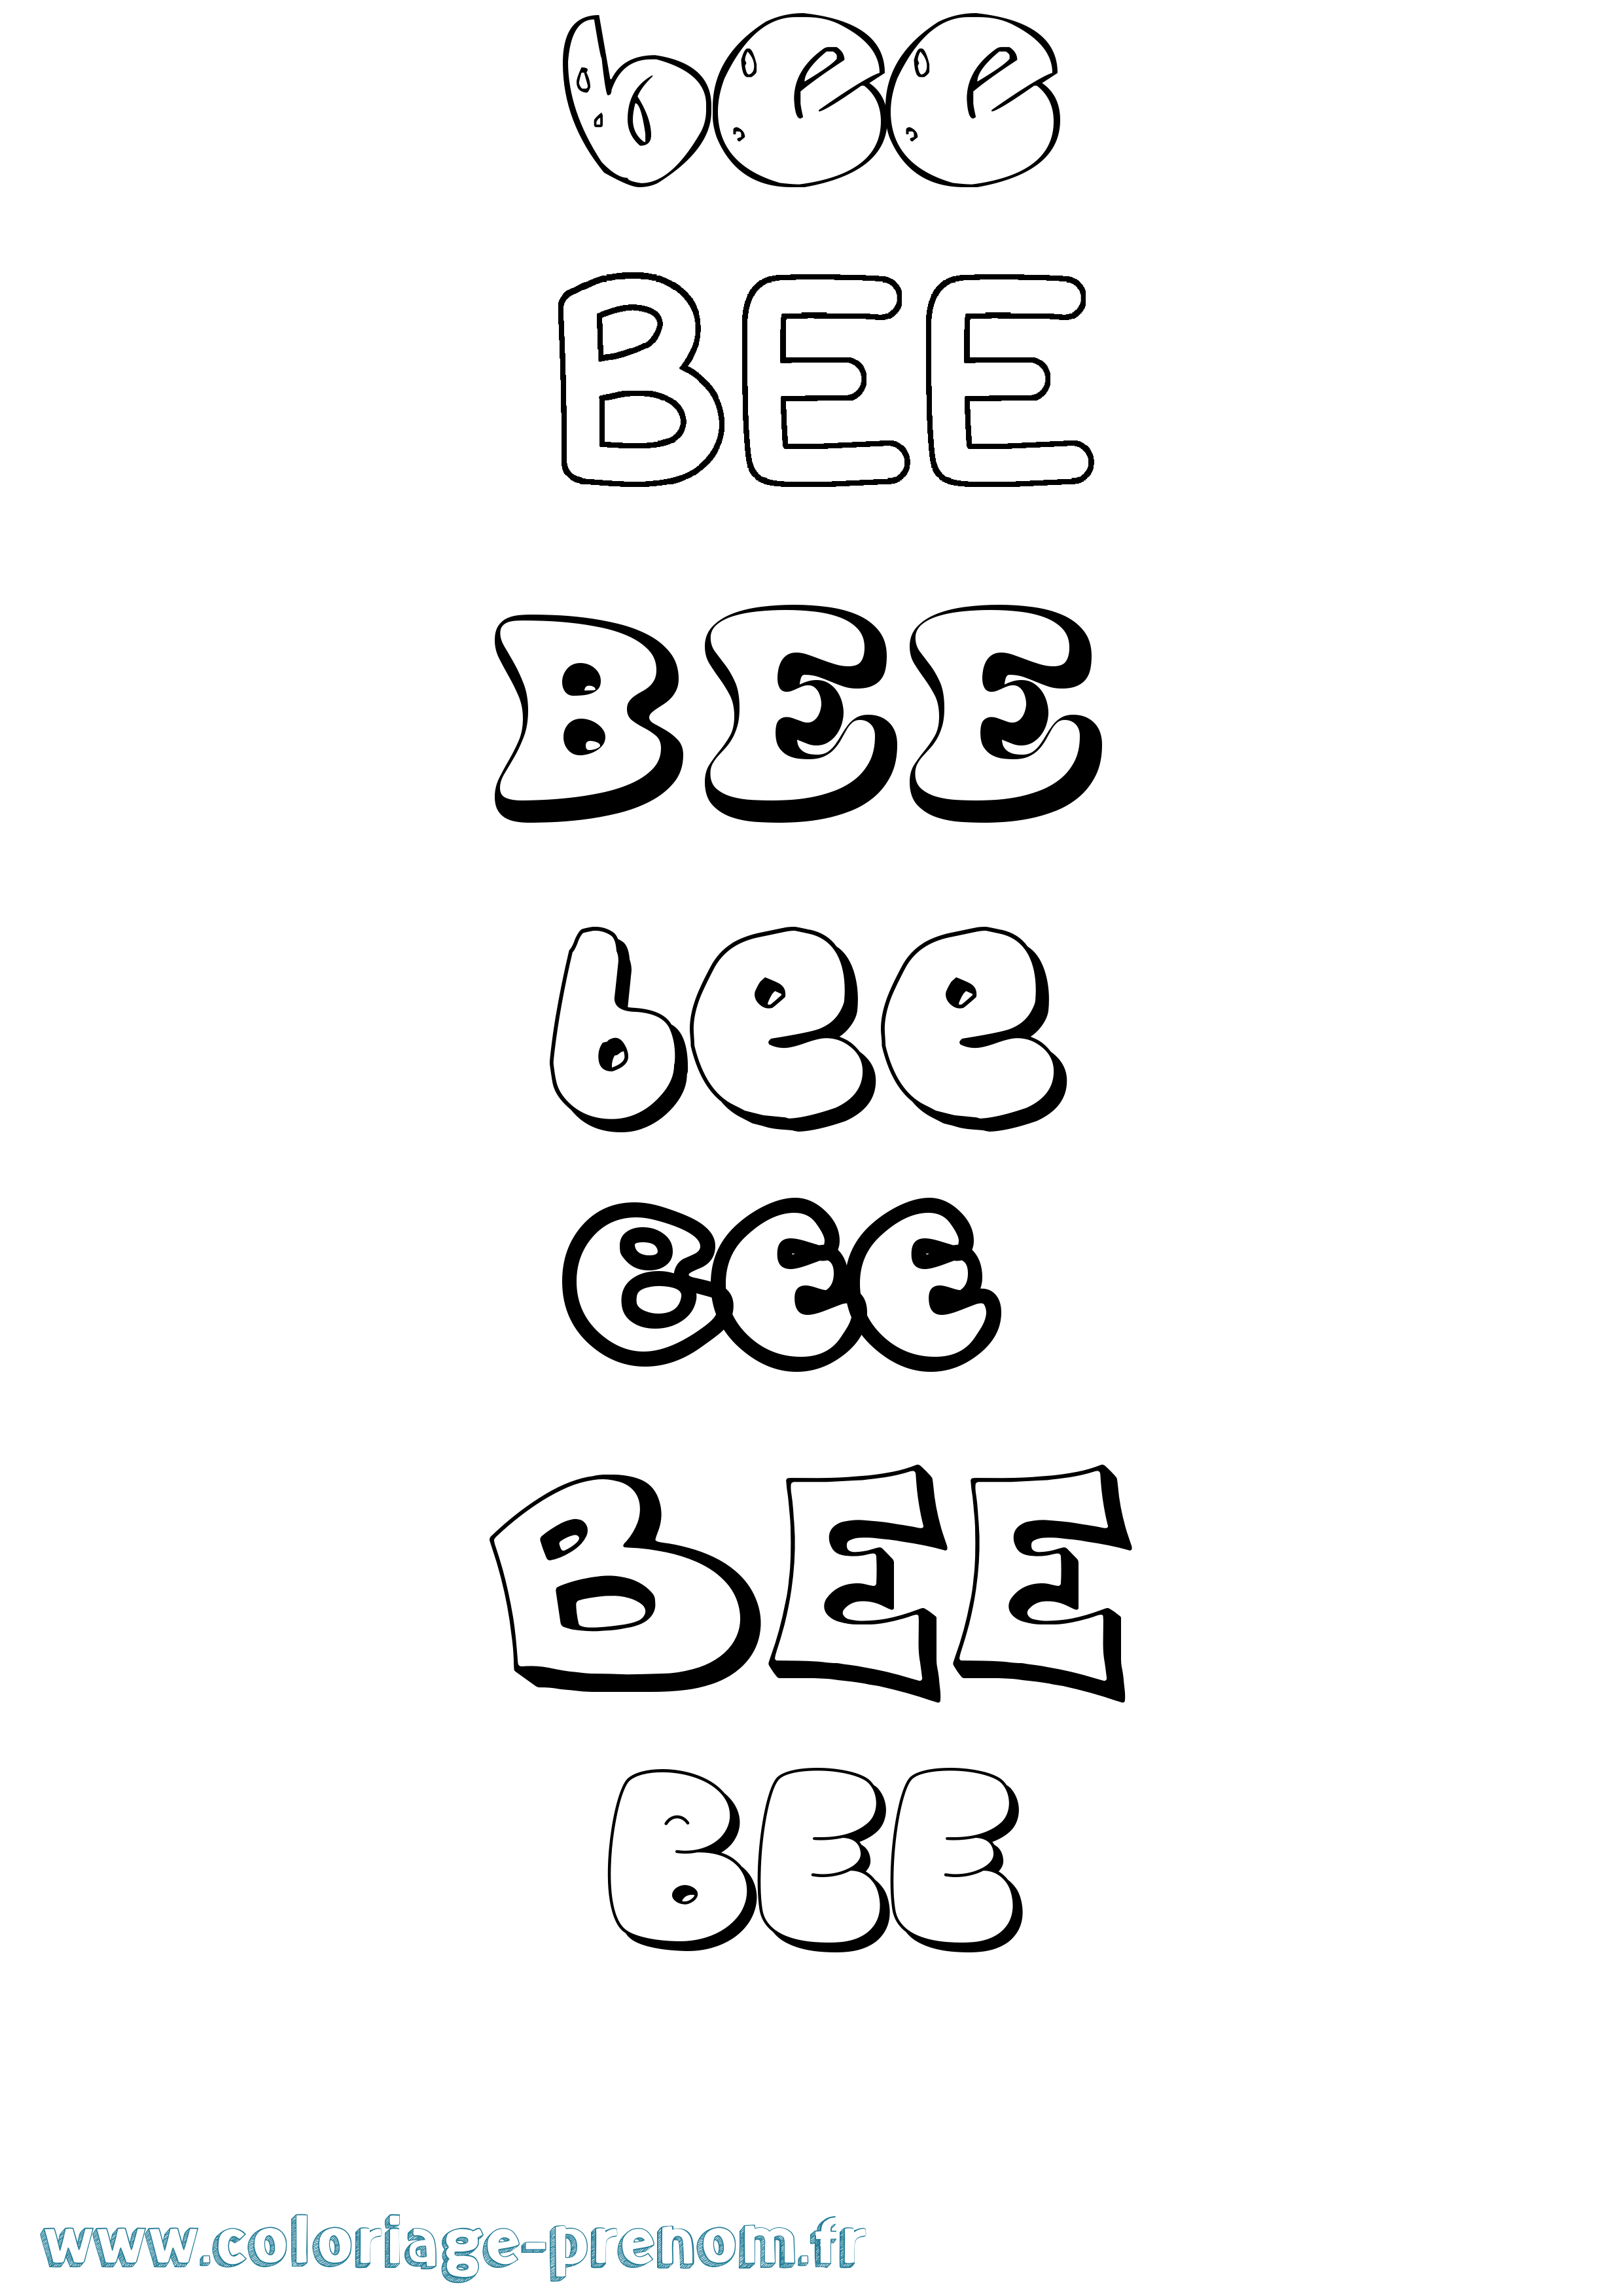 Coloriage prénom Bee Bubble